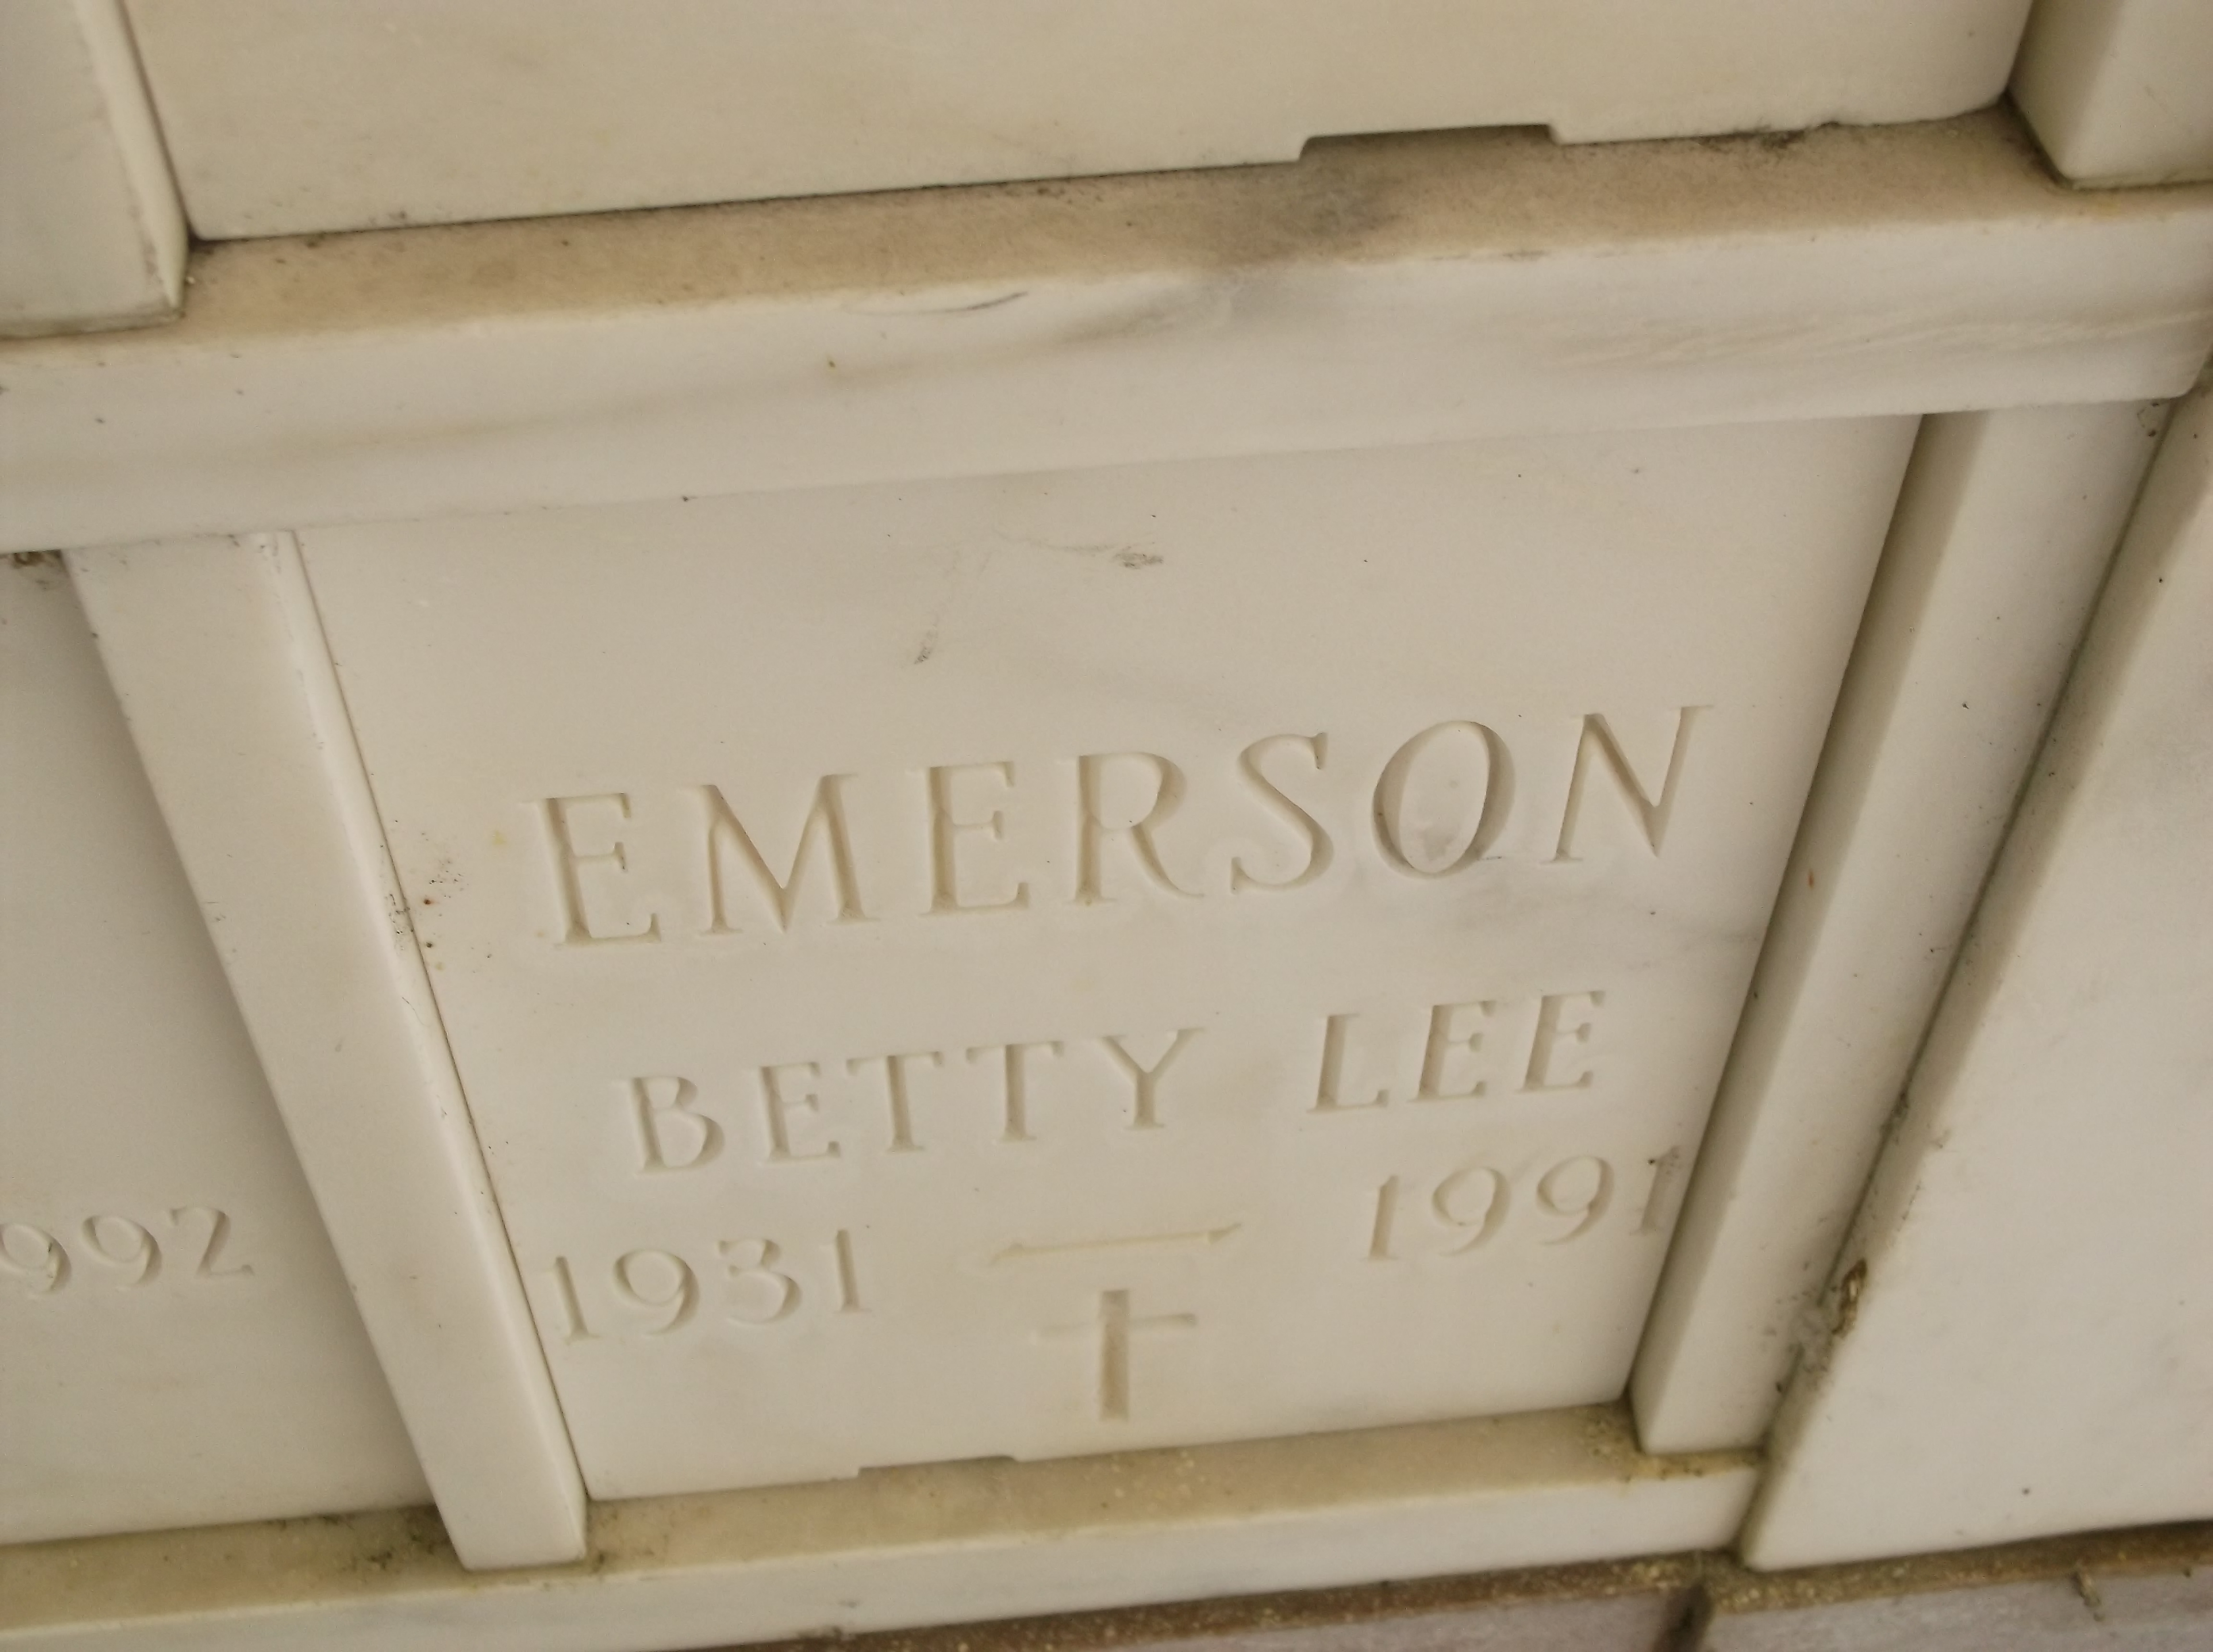 Betty Lee Emerson